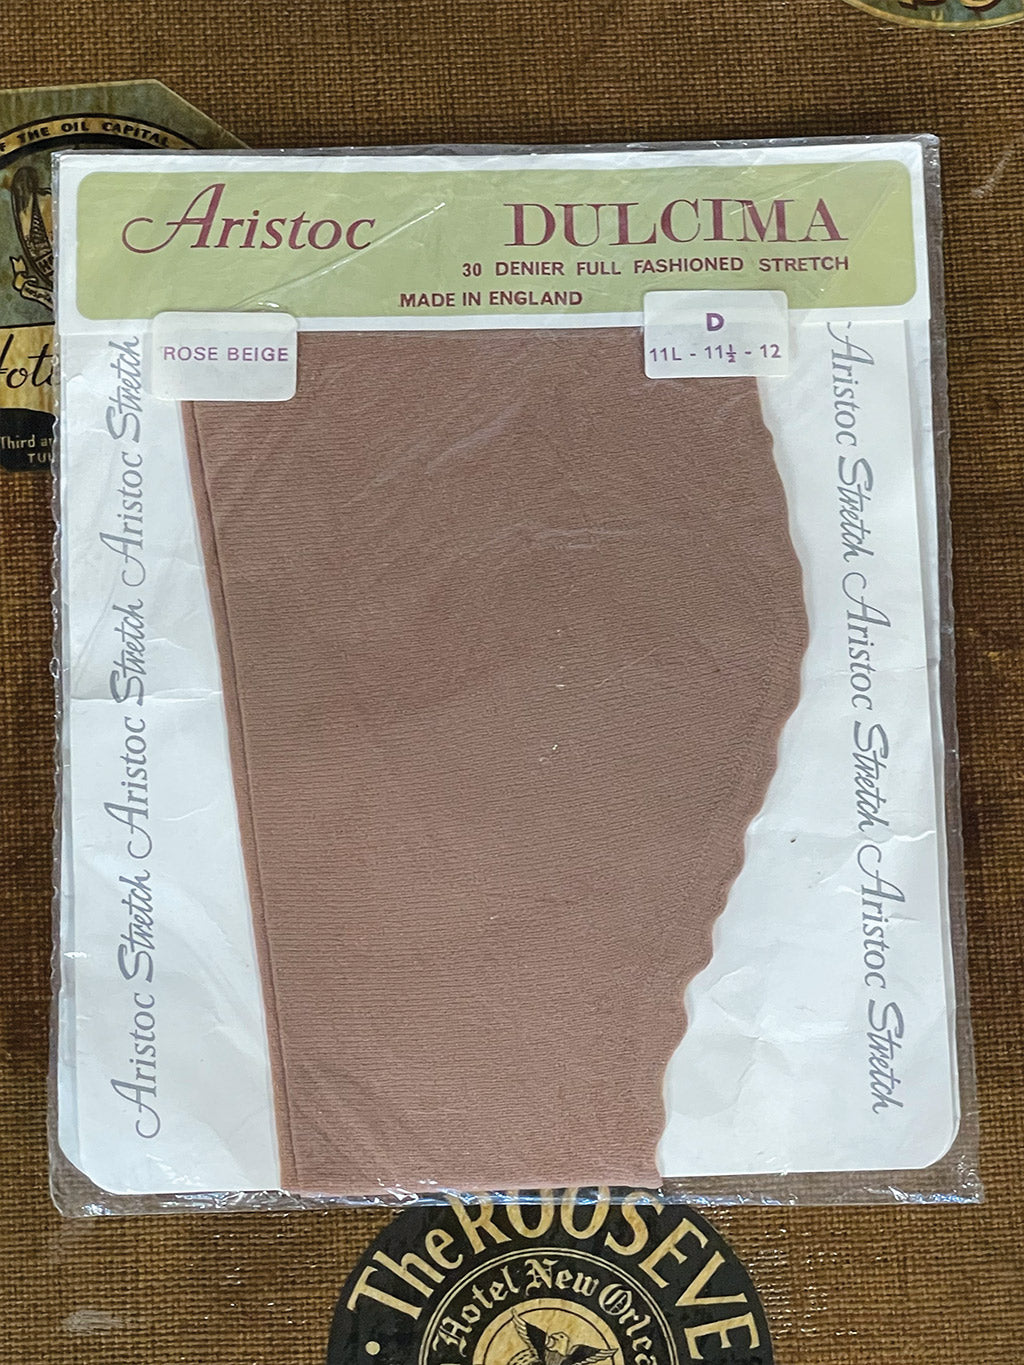 Vintage Aristoc Dulcima Fully Fashioned Stockings front